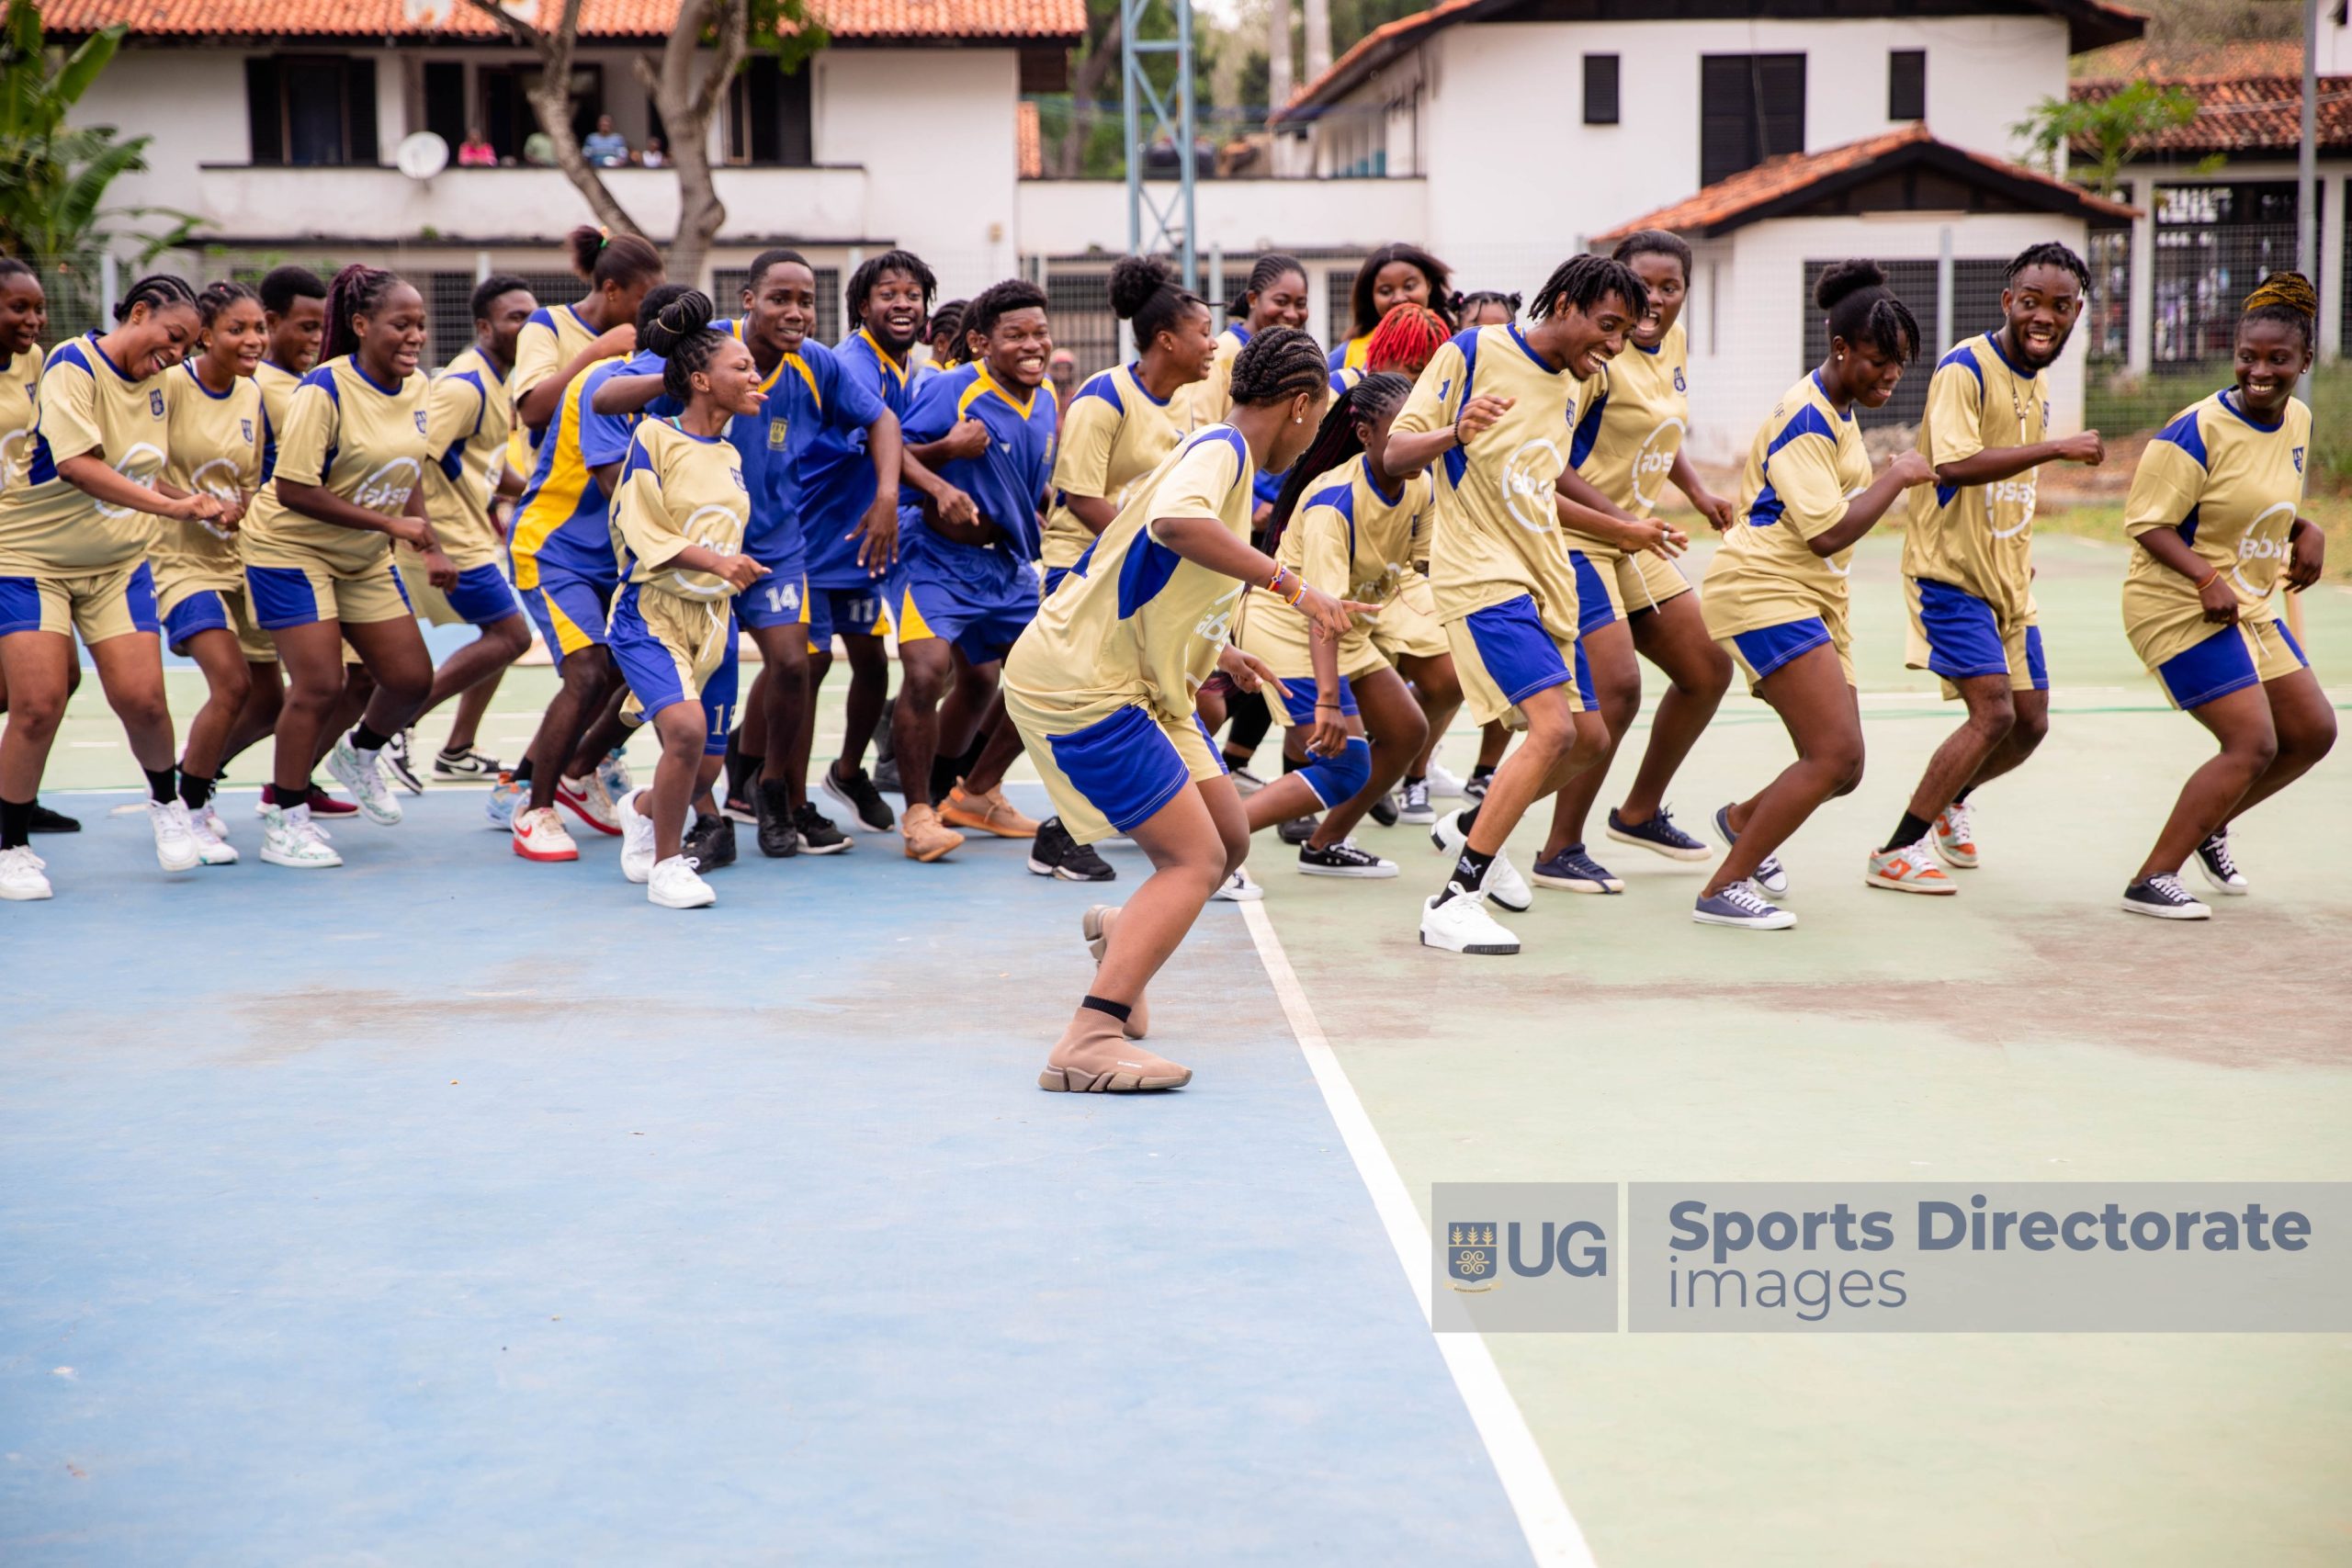 University of Ghana @75 Sporting Activities held